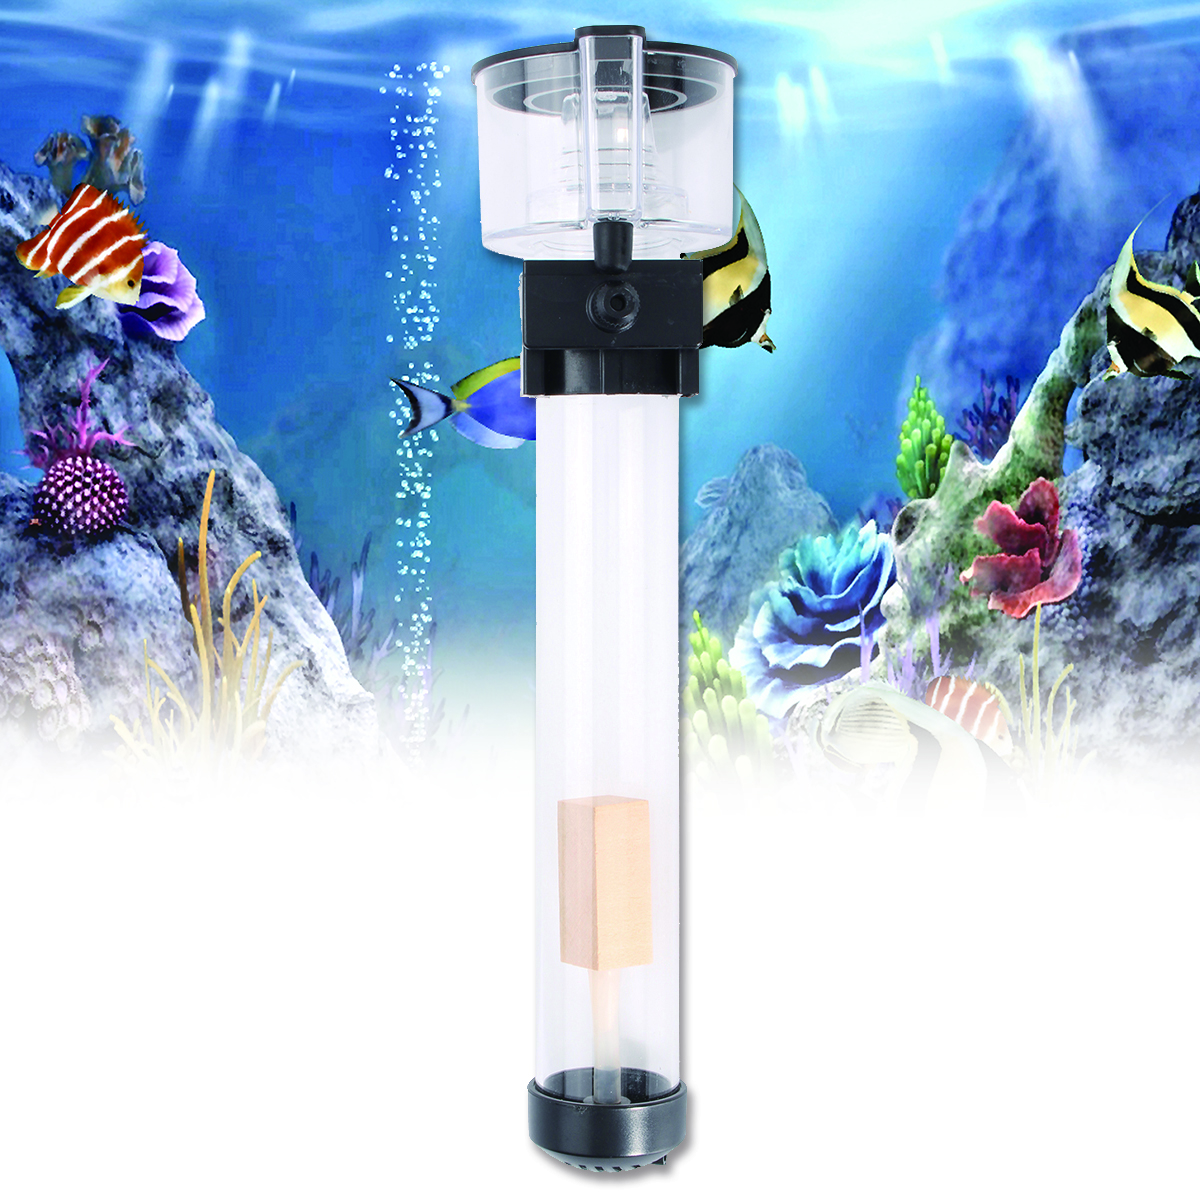 Acrylic-Black-Aquarium-Filter-Clear-Protein-Skimmer-Small-Fish-Tank-Aquarium-Salt-Water-Filter-1248143-2